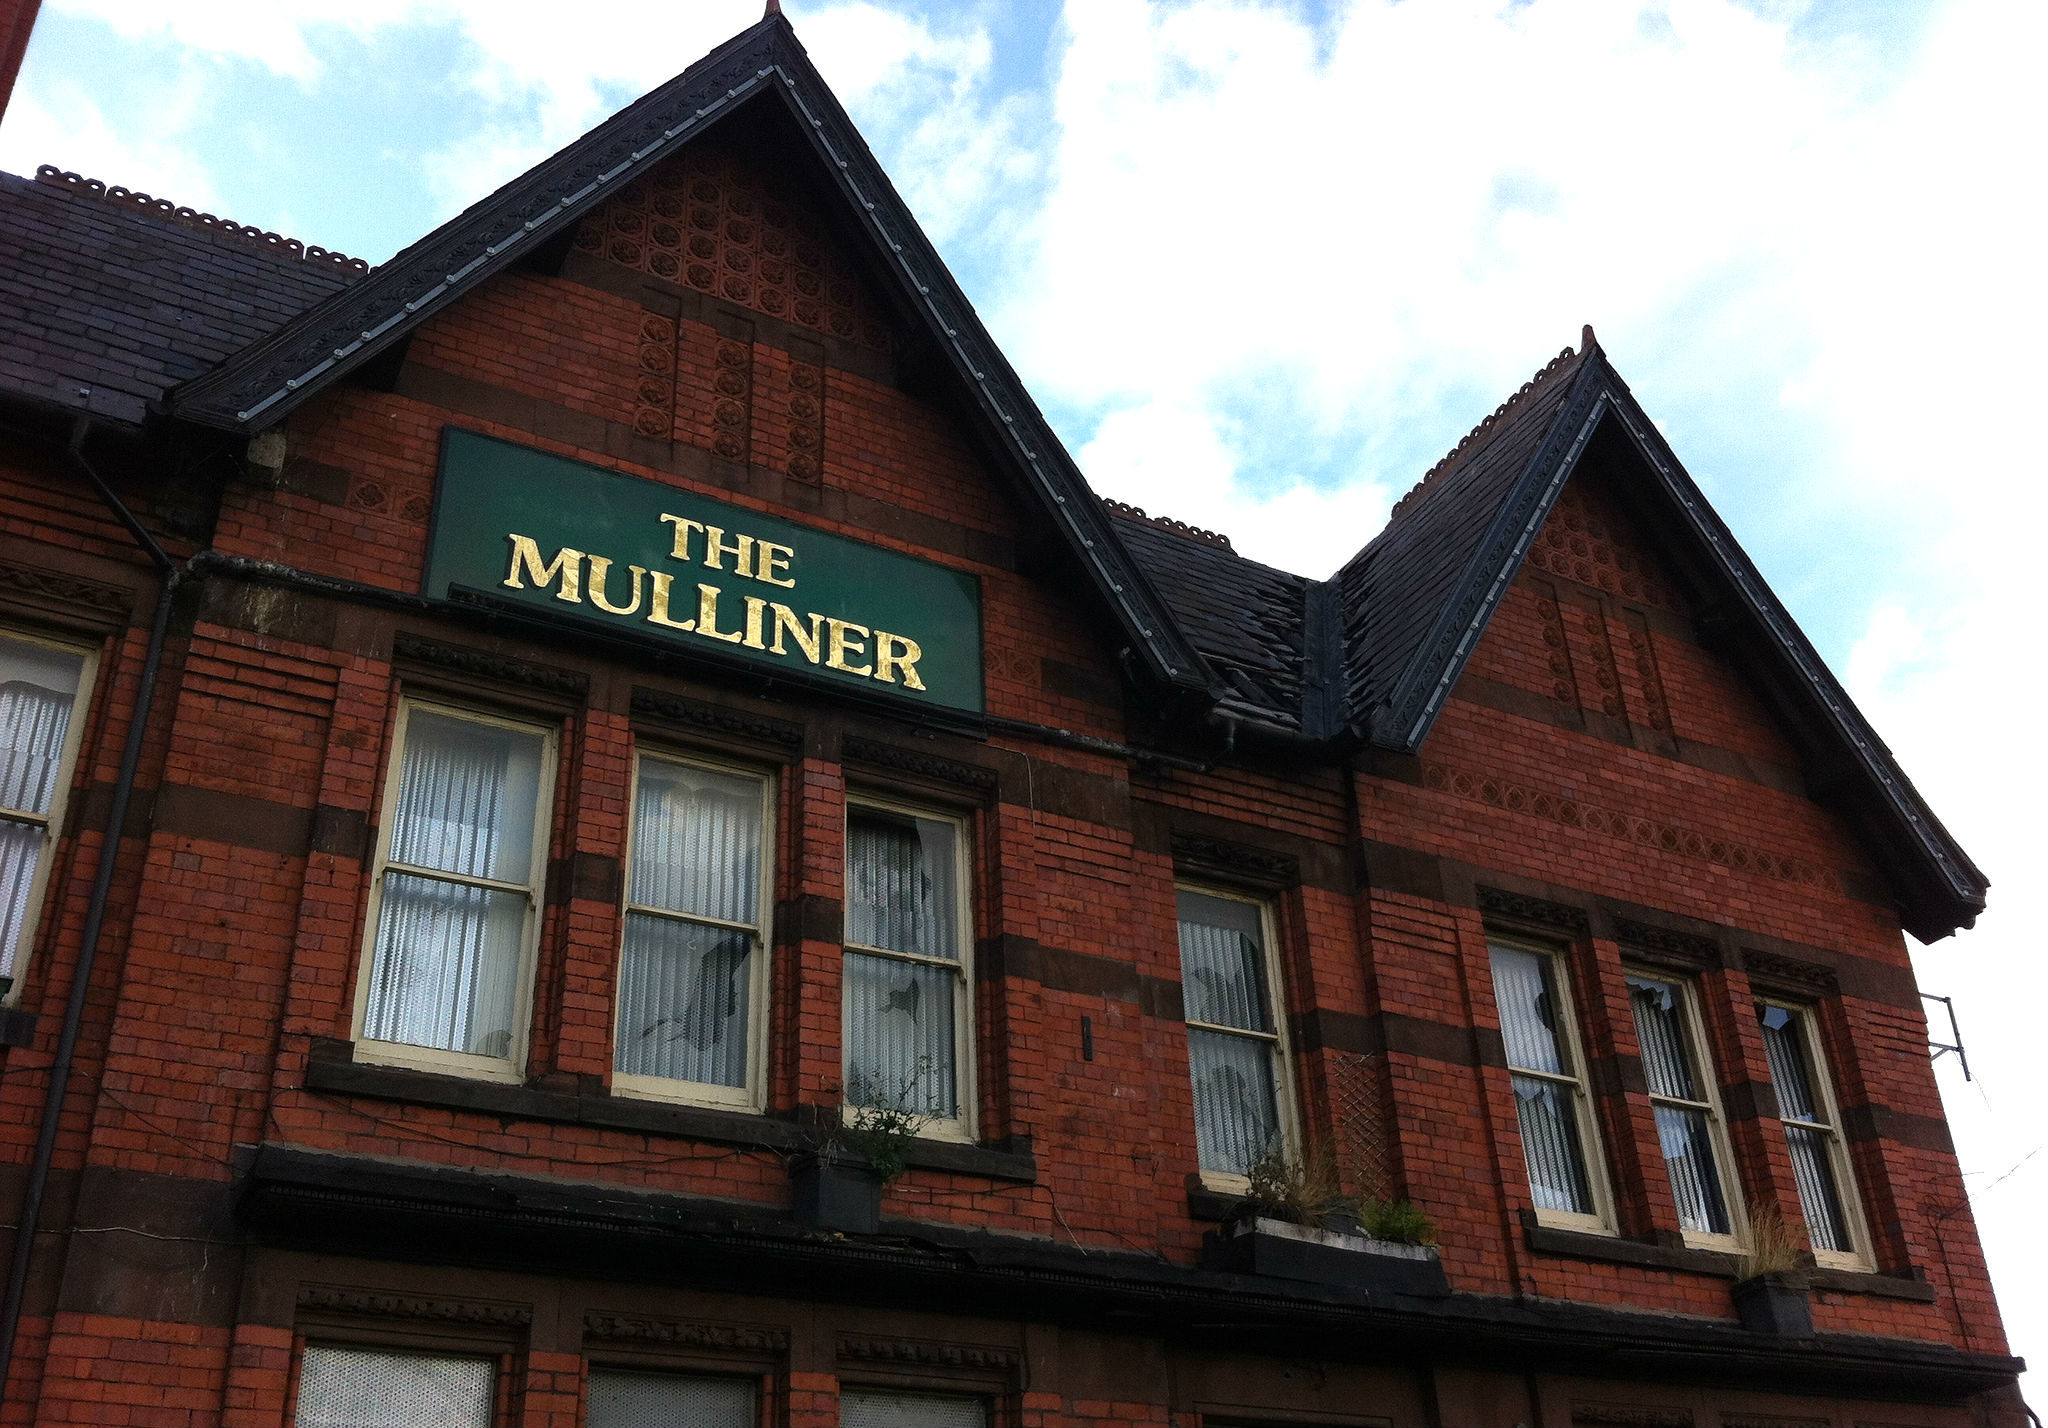 the mulliner